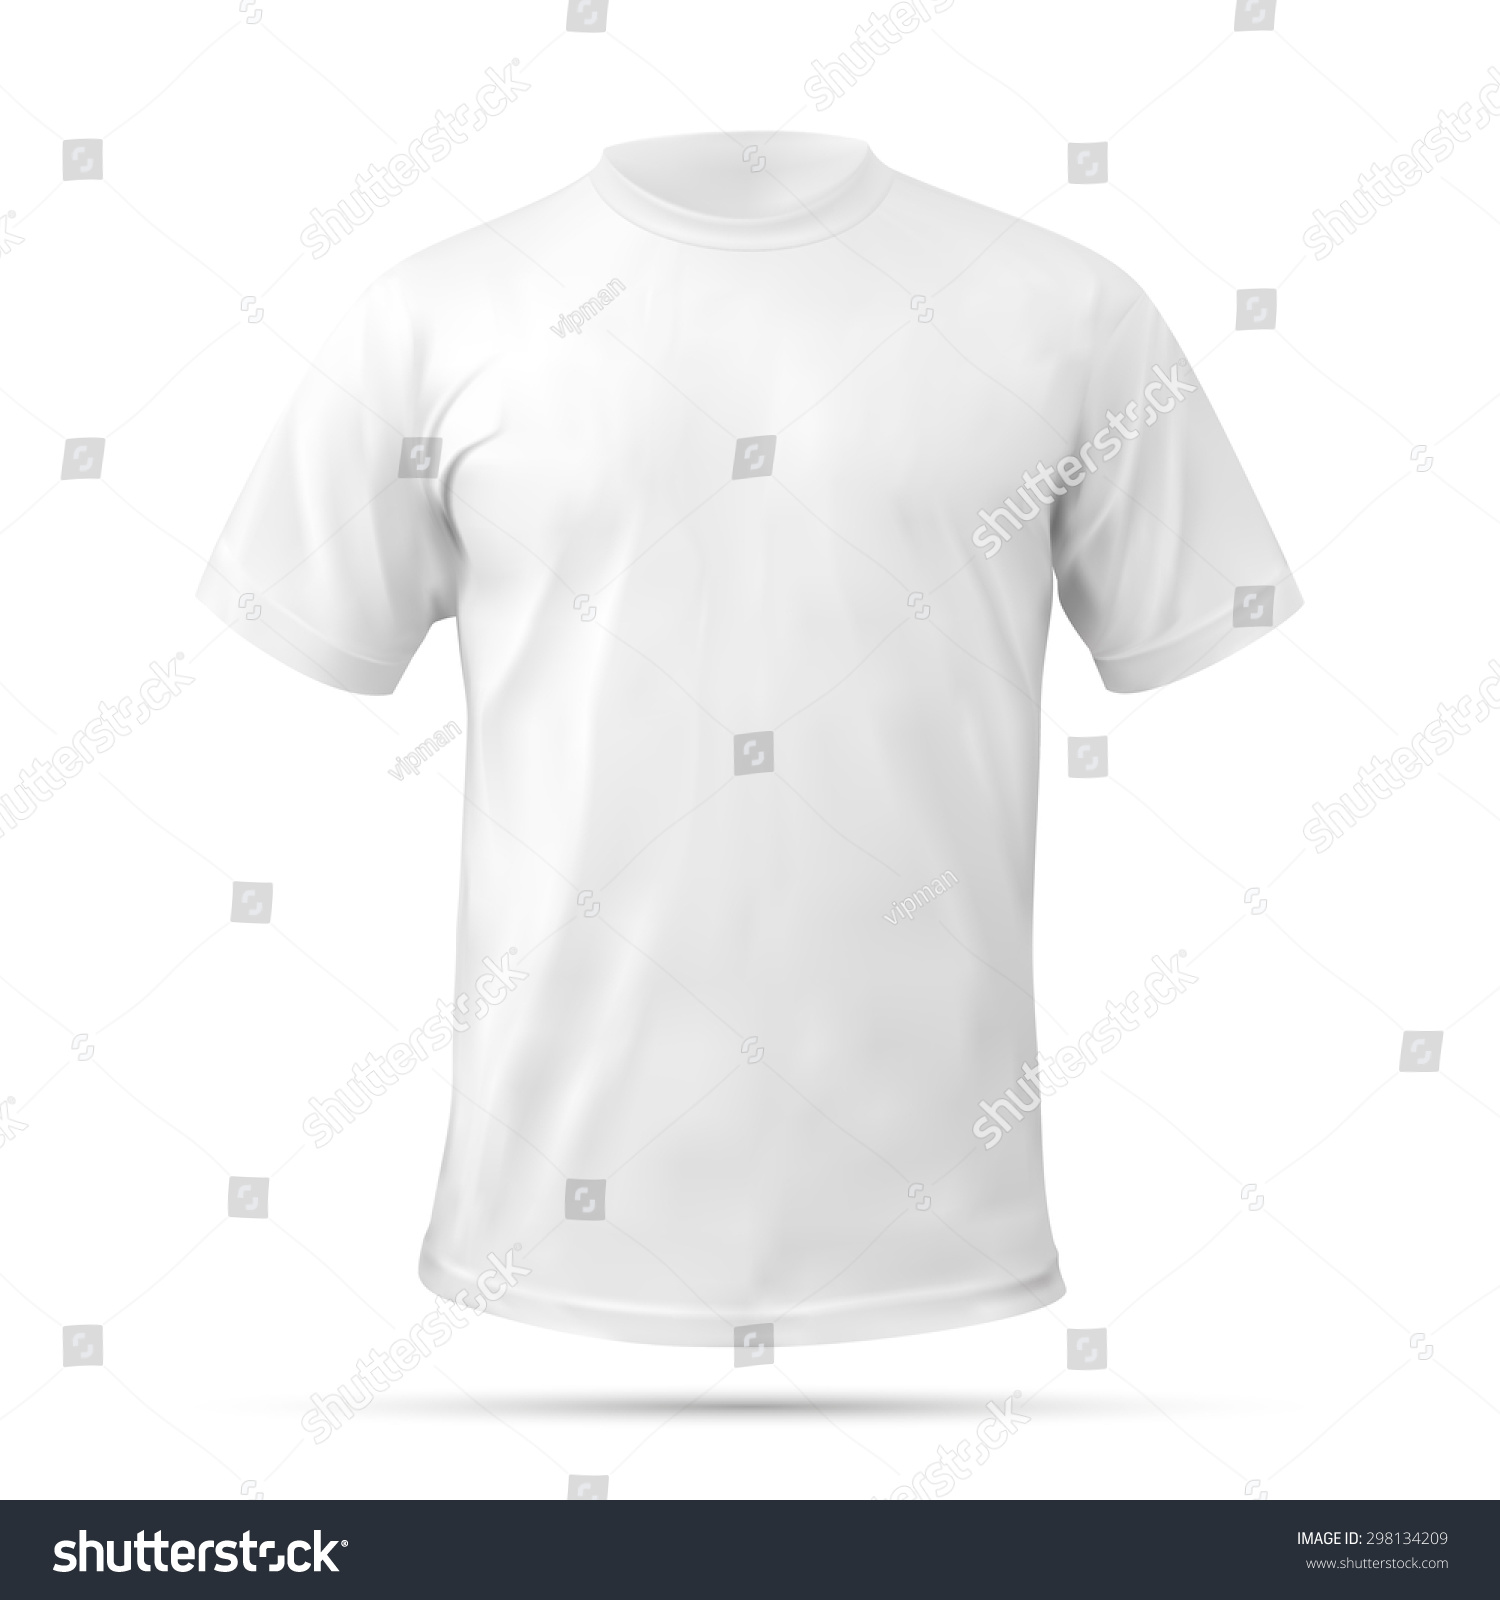 Blank T-Shirts Template Stock Vector Illustration 298134209 : Shutterstock